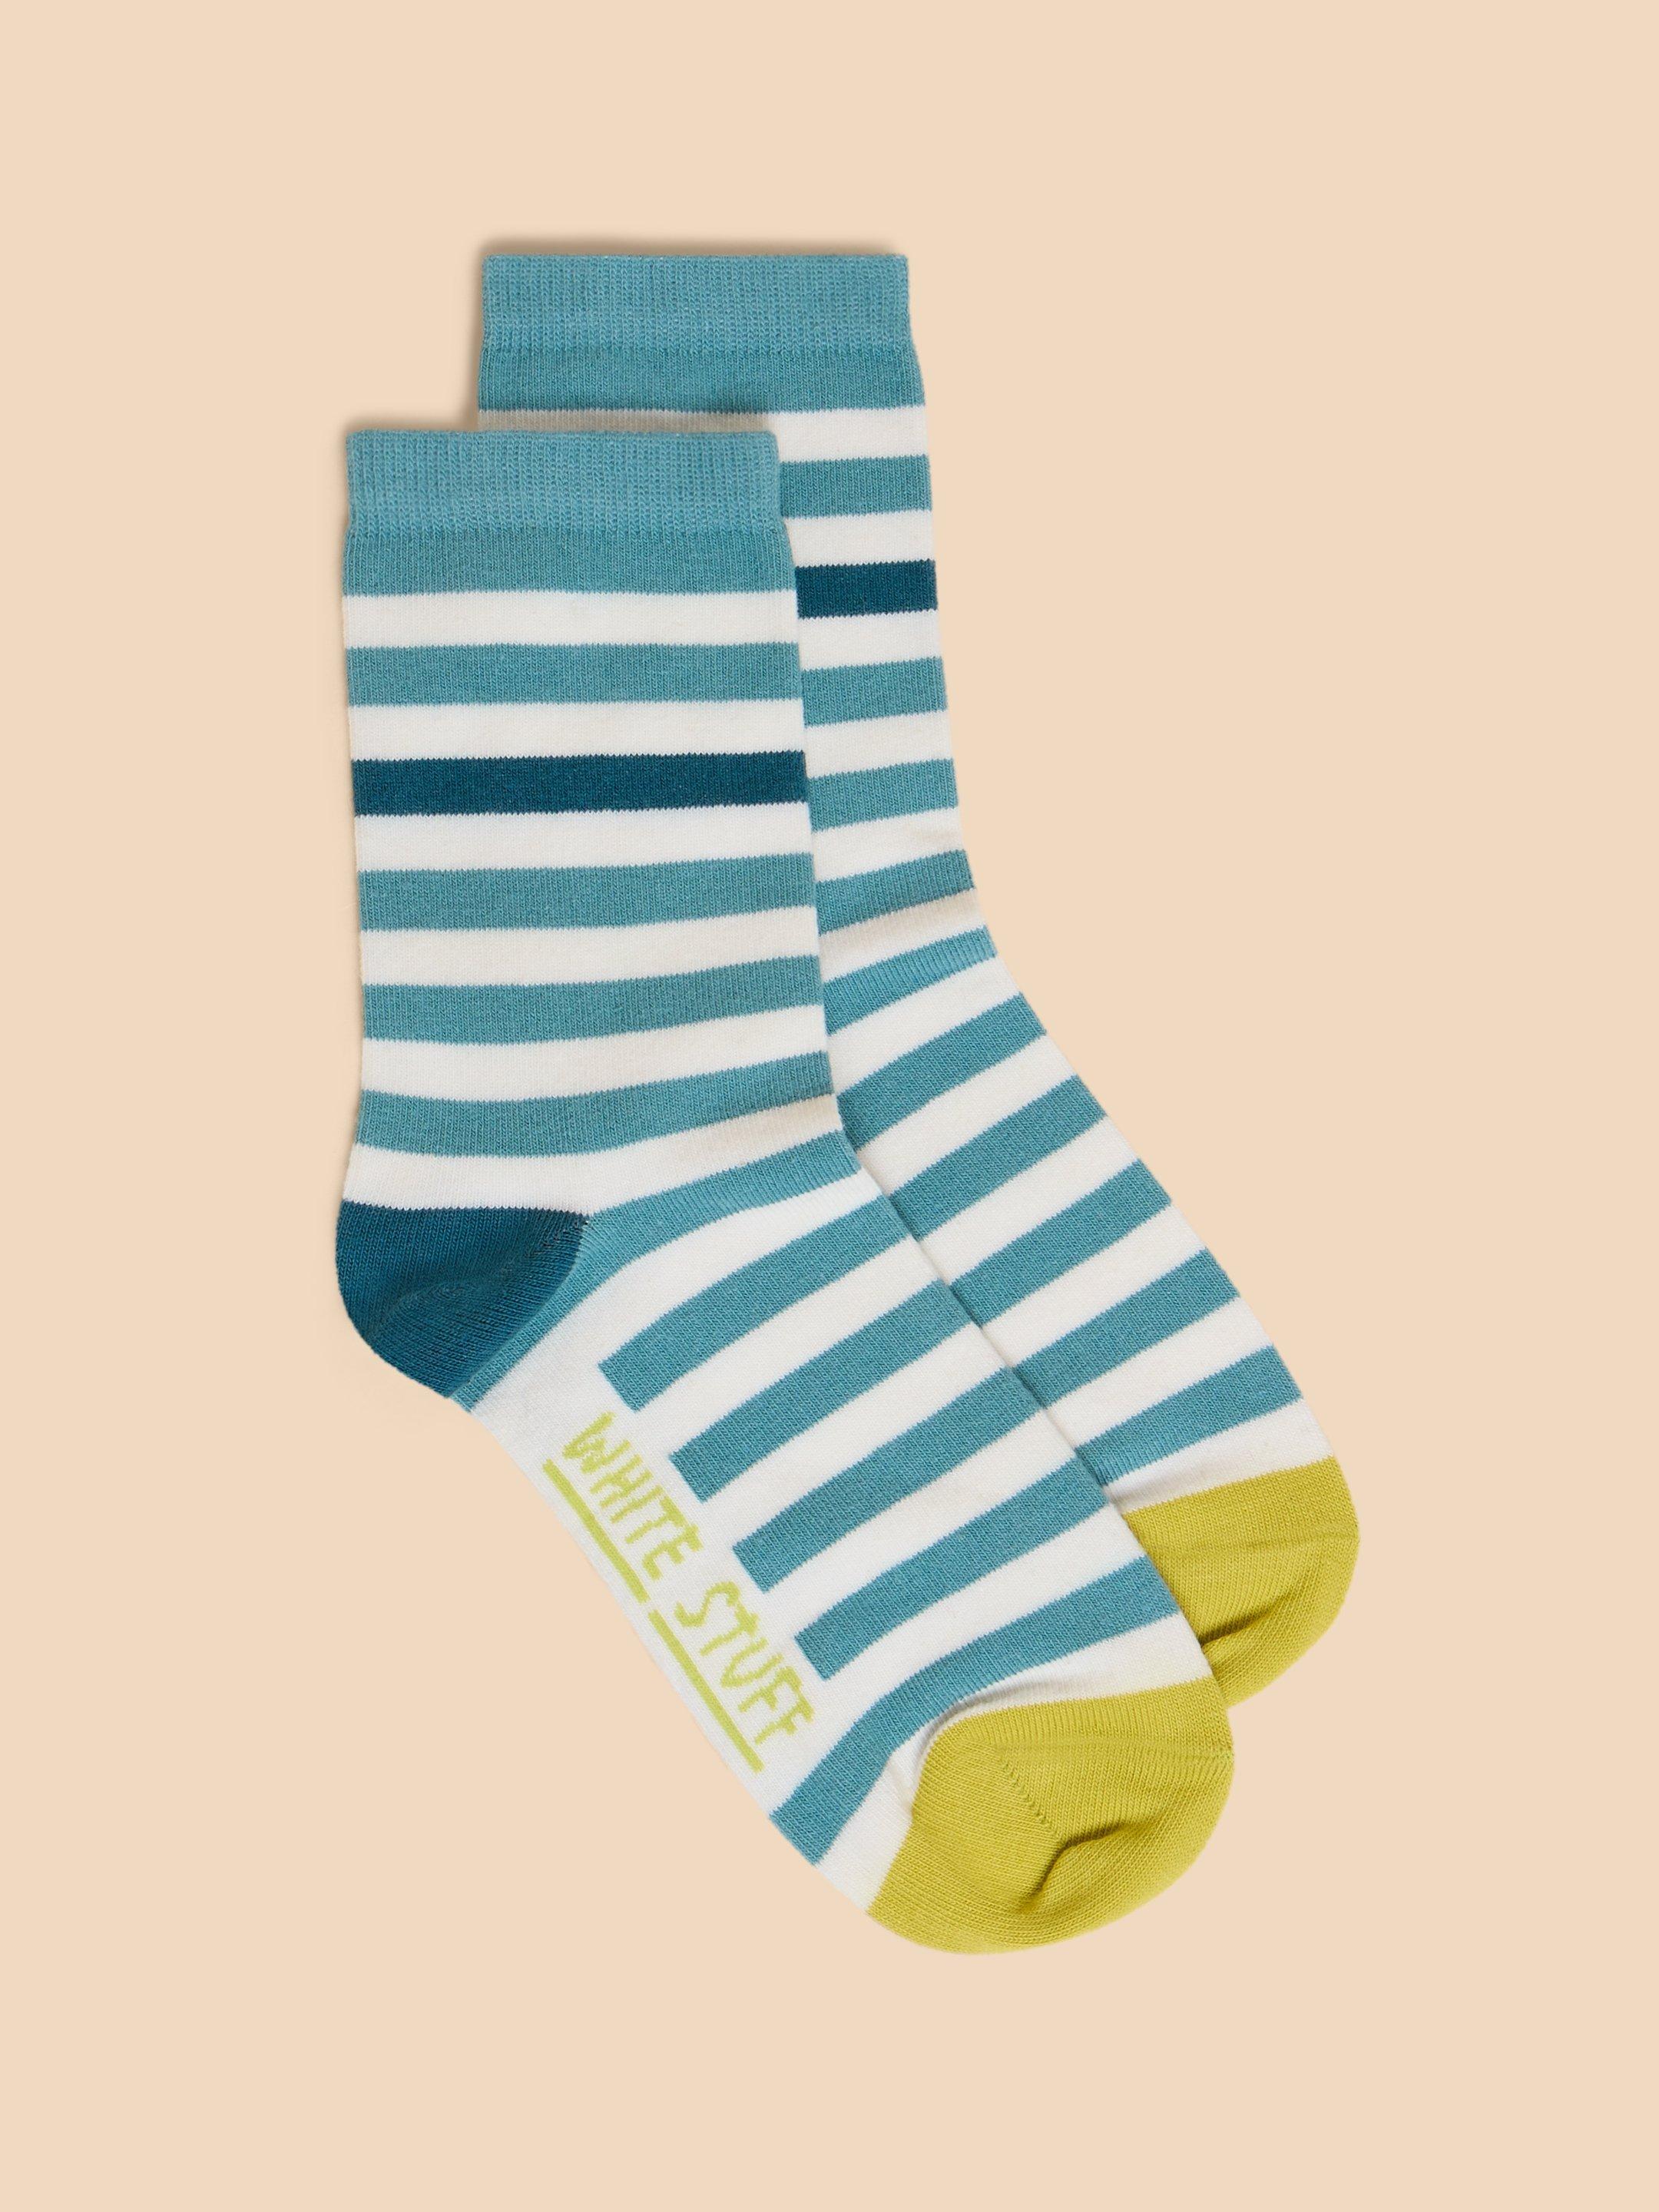 Stripe Patterned Ankle Socks